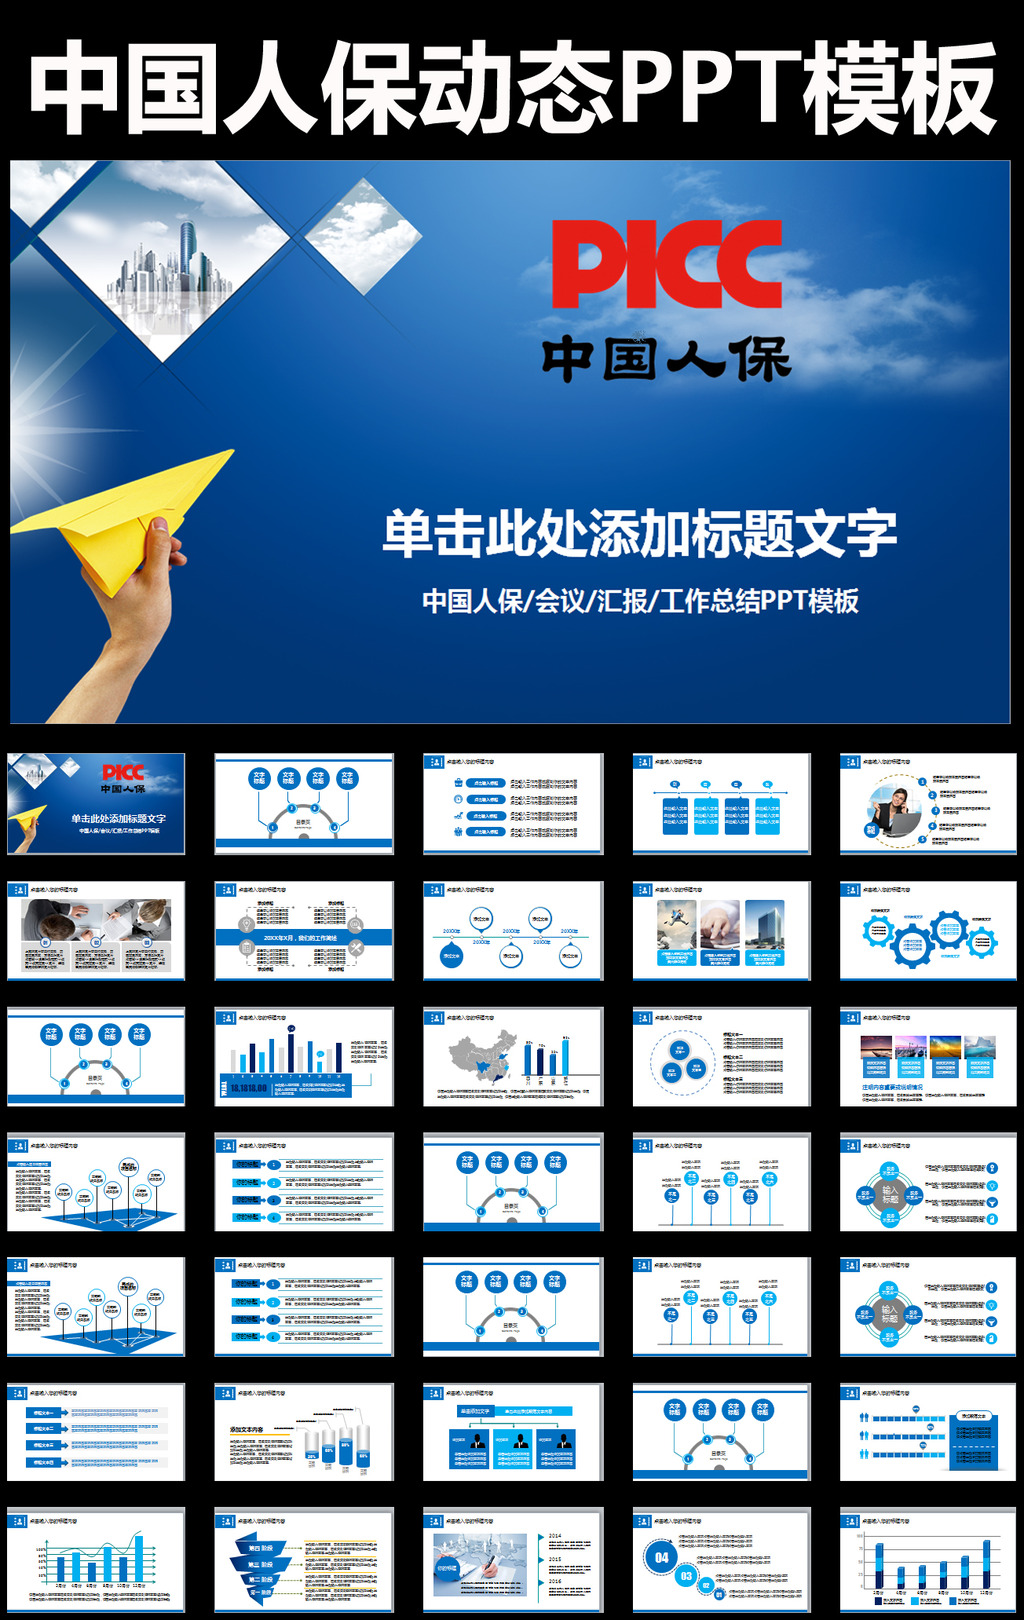 PICC中国人民保险公司PPT模板背景